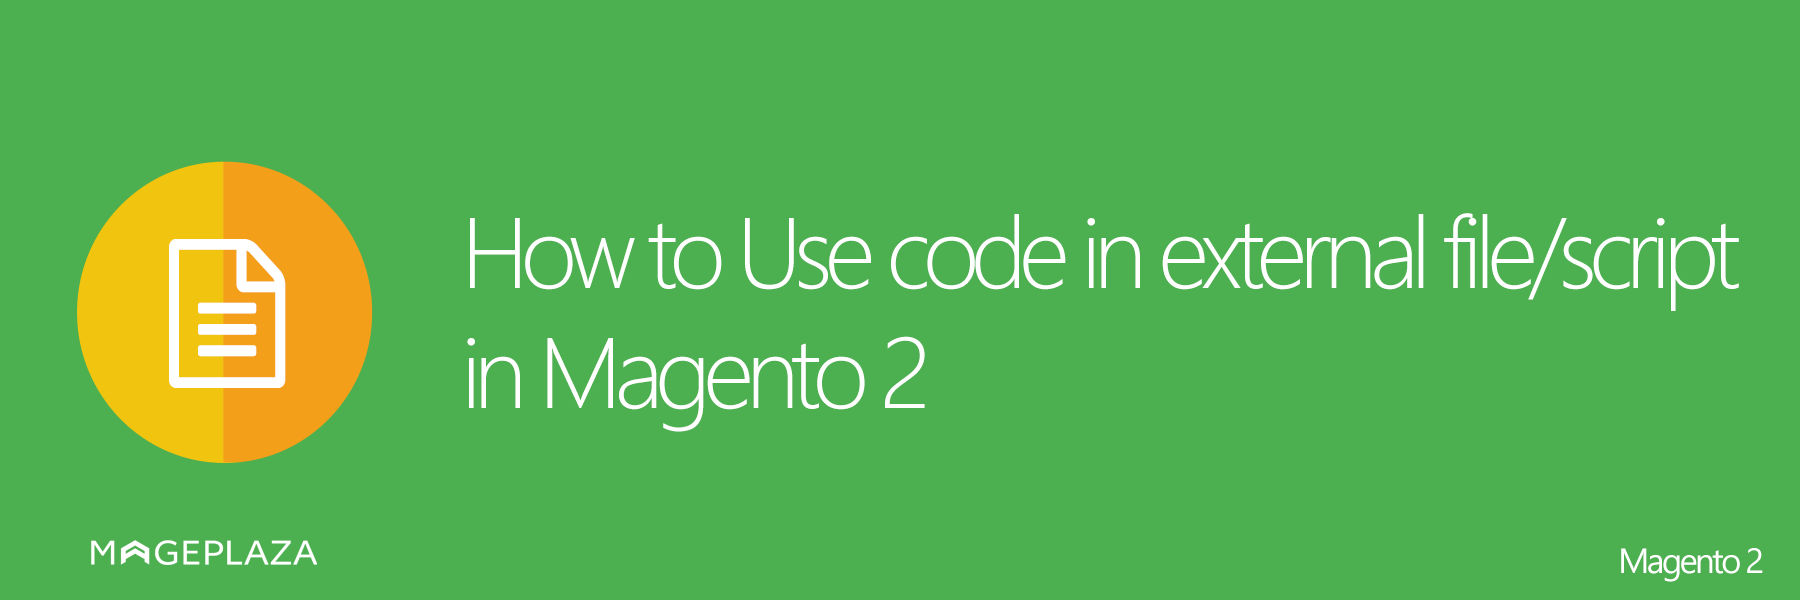 Use code in external file/script